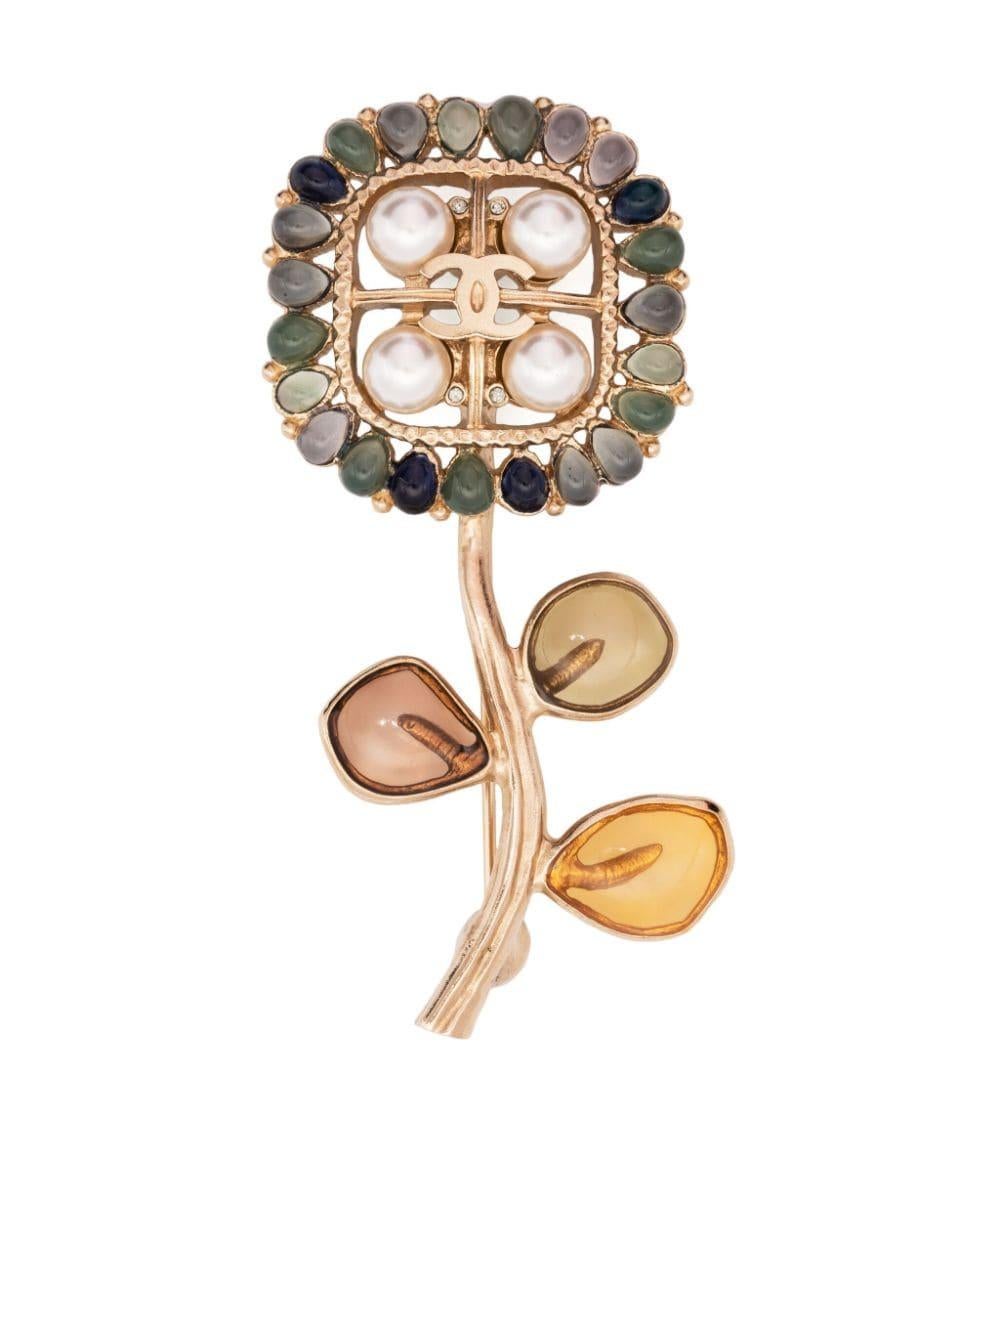 2019 Chanel Gripoix Glass Flower Brooch For Sale 1